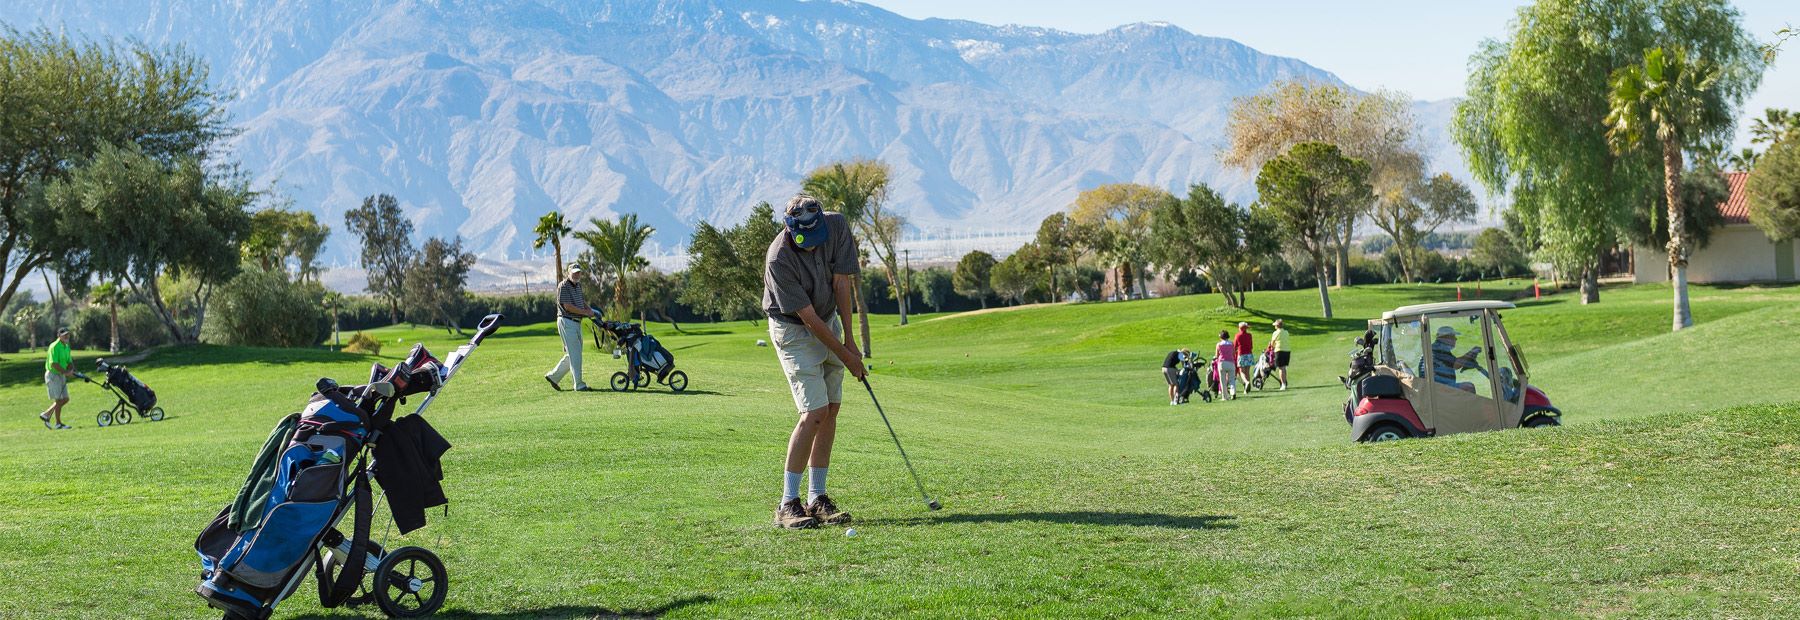 The Sands RV & Golf Resort Palm Springs Amenities